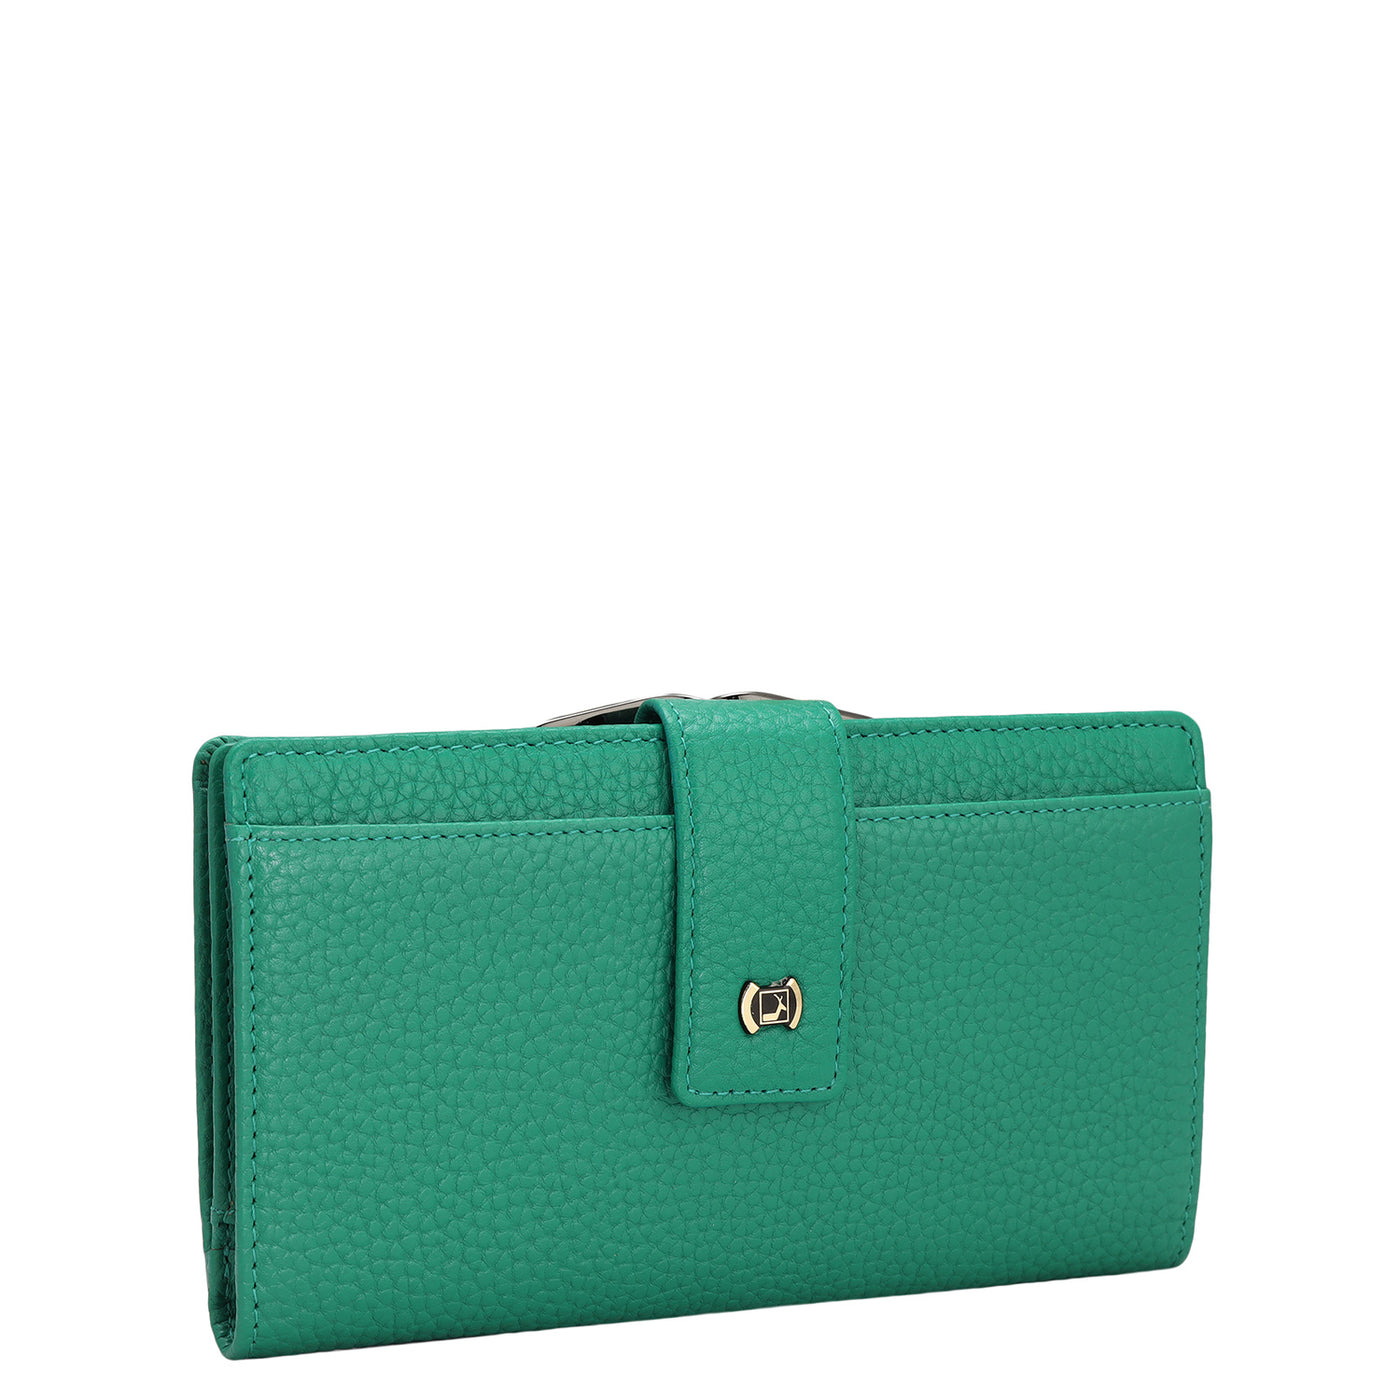 Wax Leather Ladies Wallet - Green